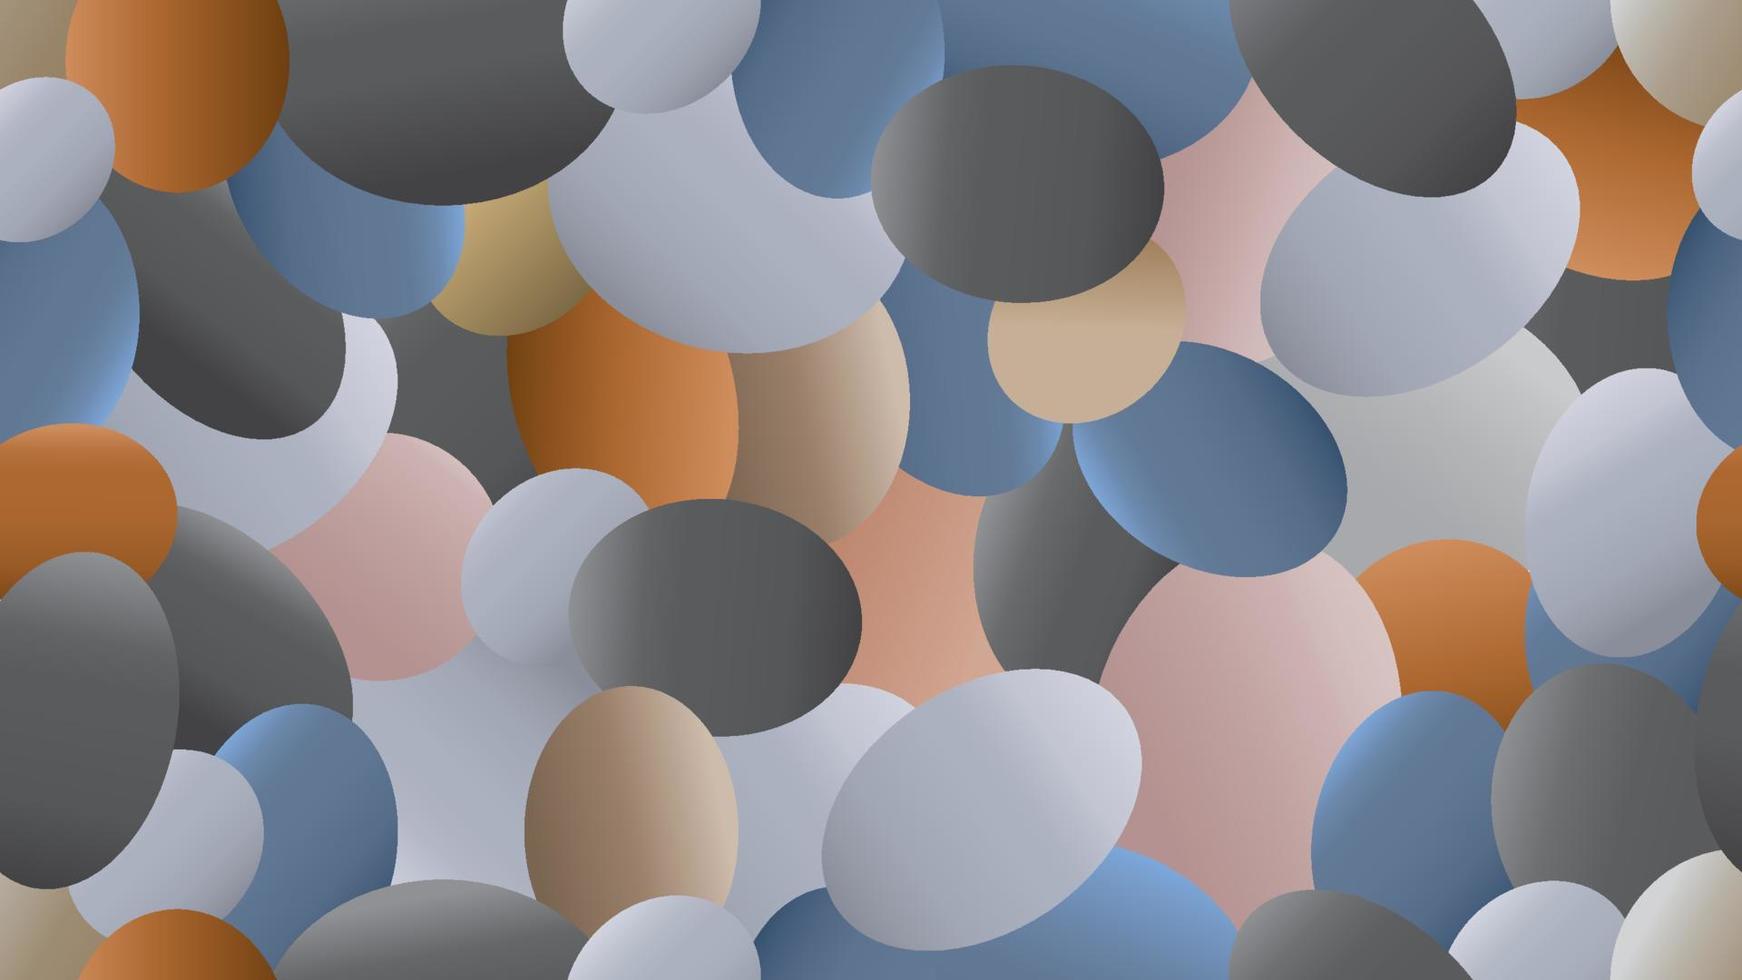 pile of stones vector illustration. aesthetic background design template. seamless pattern. oval shape like an egg.